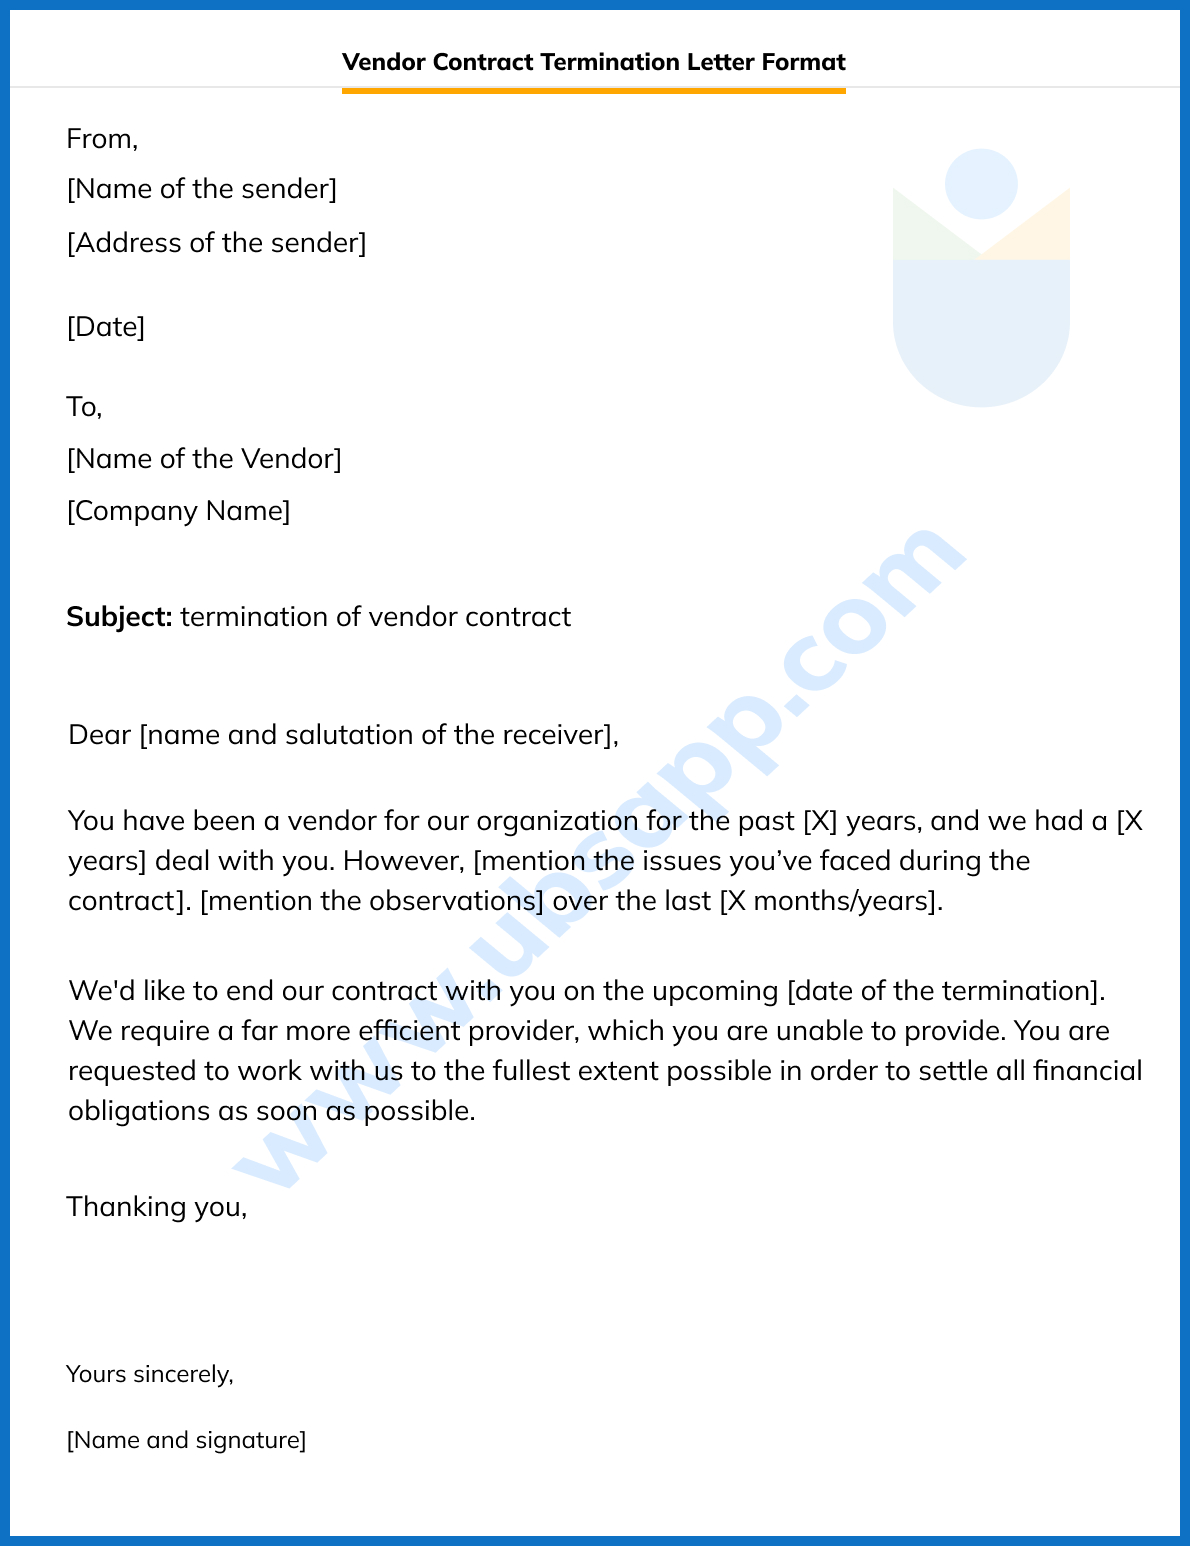 Vendor Contract Termination Letter Format